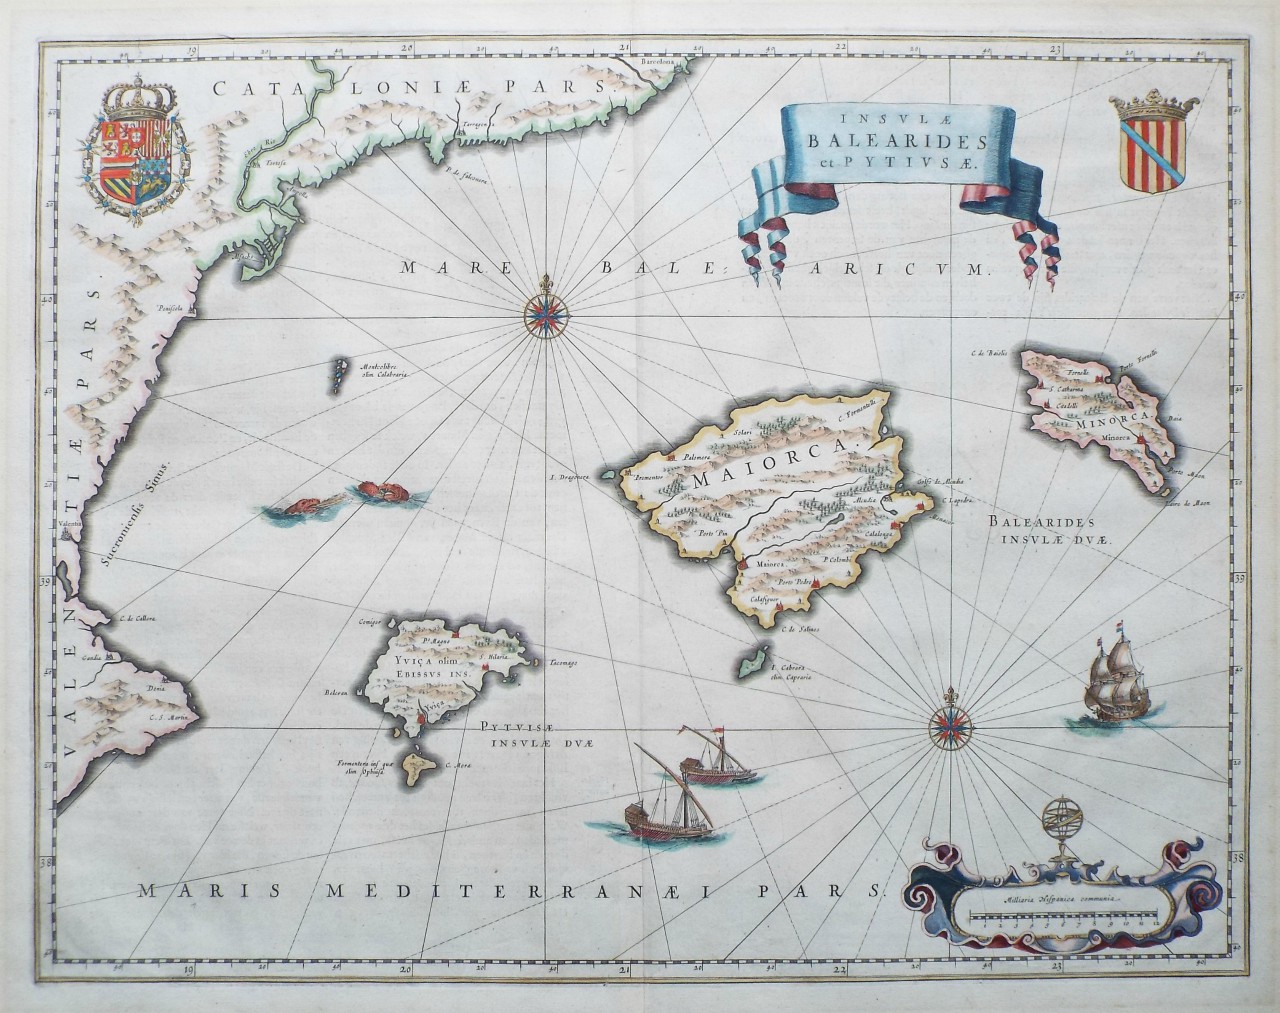 Map of Balearic Islands